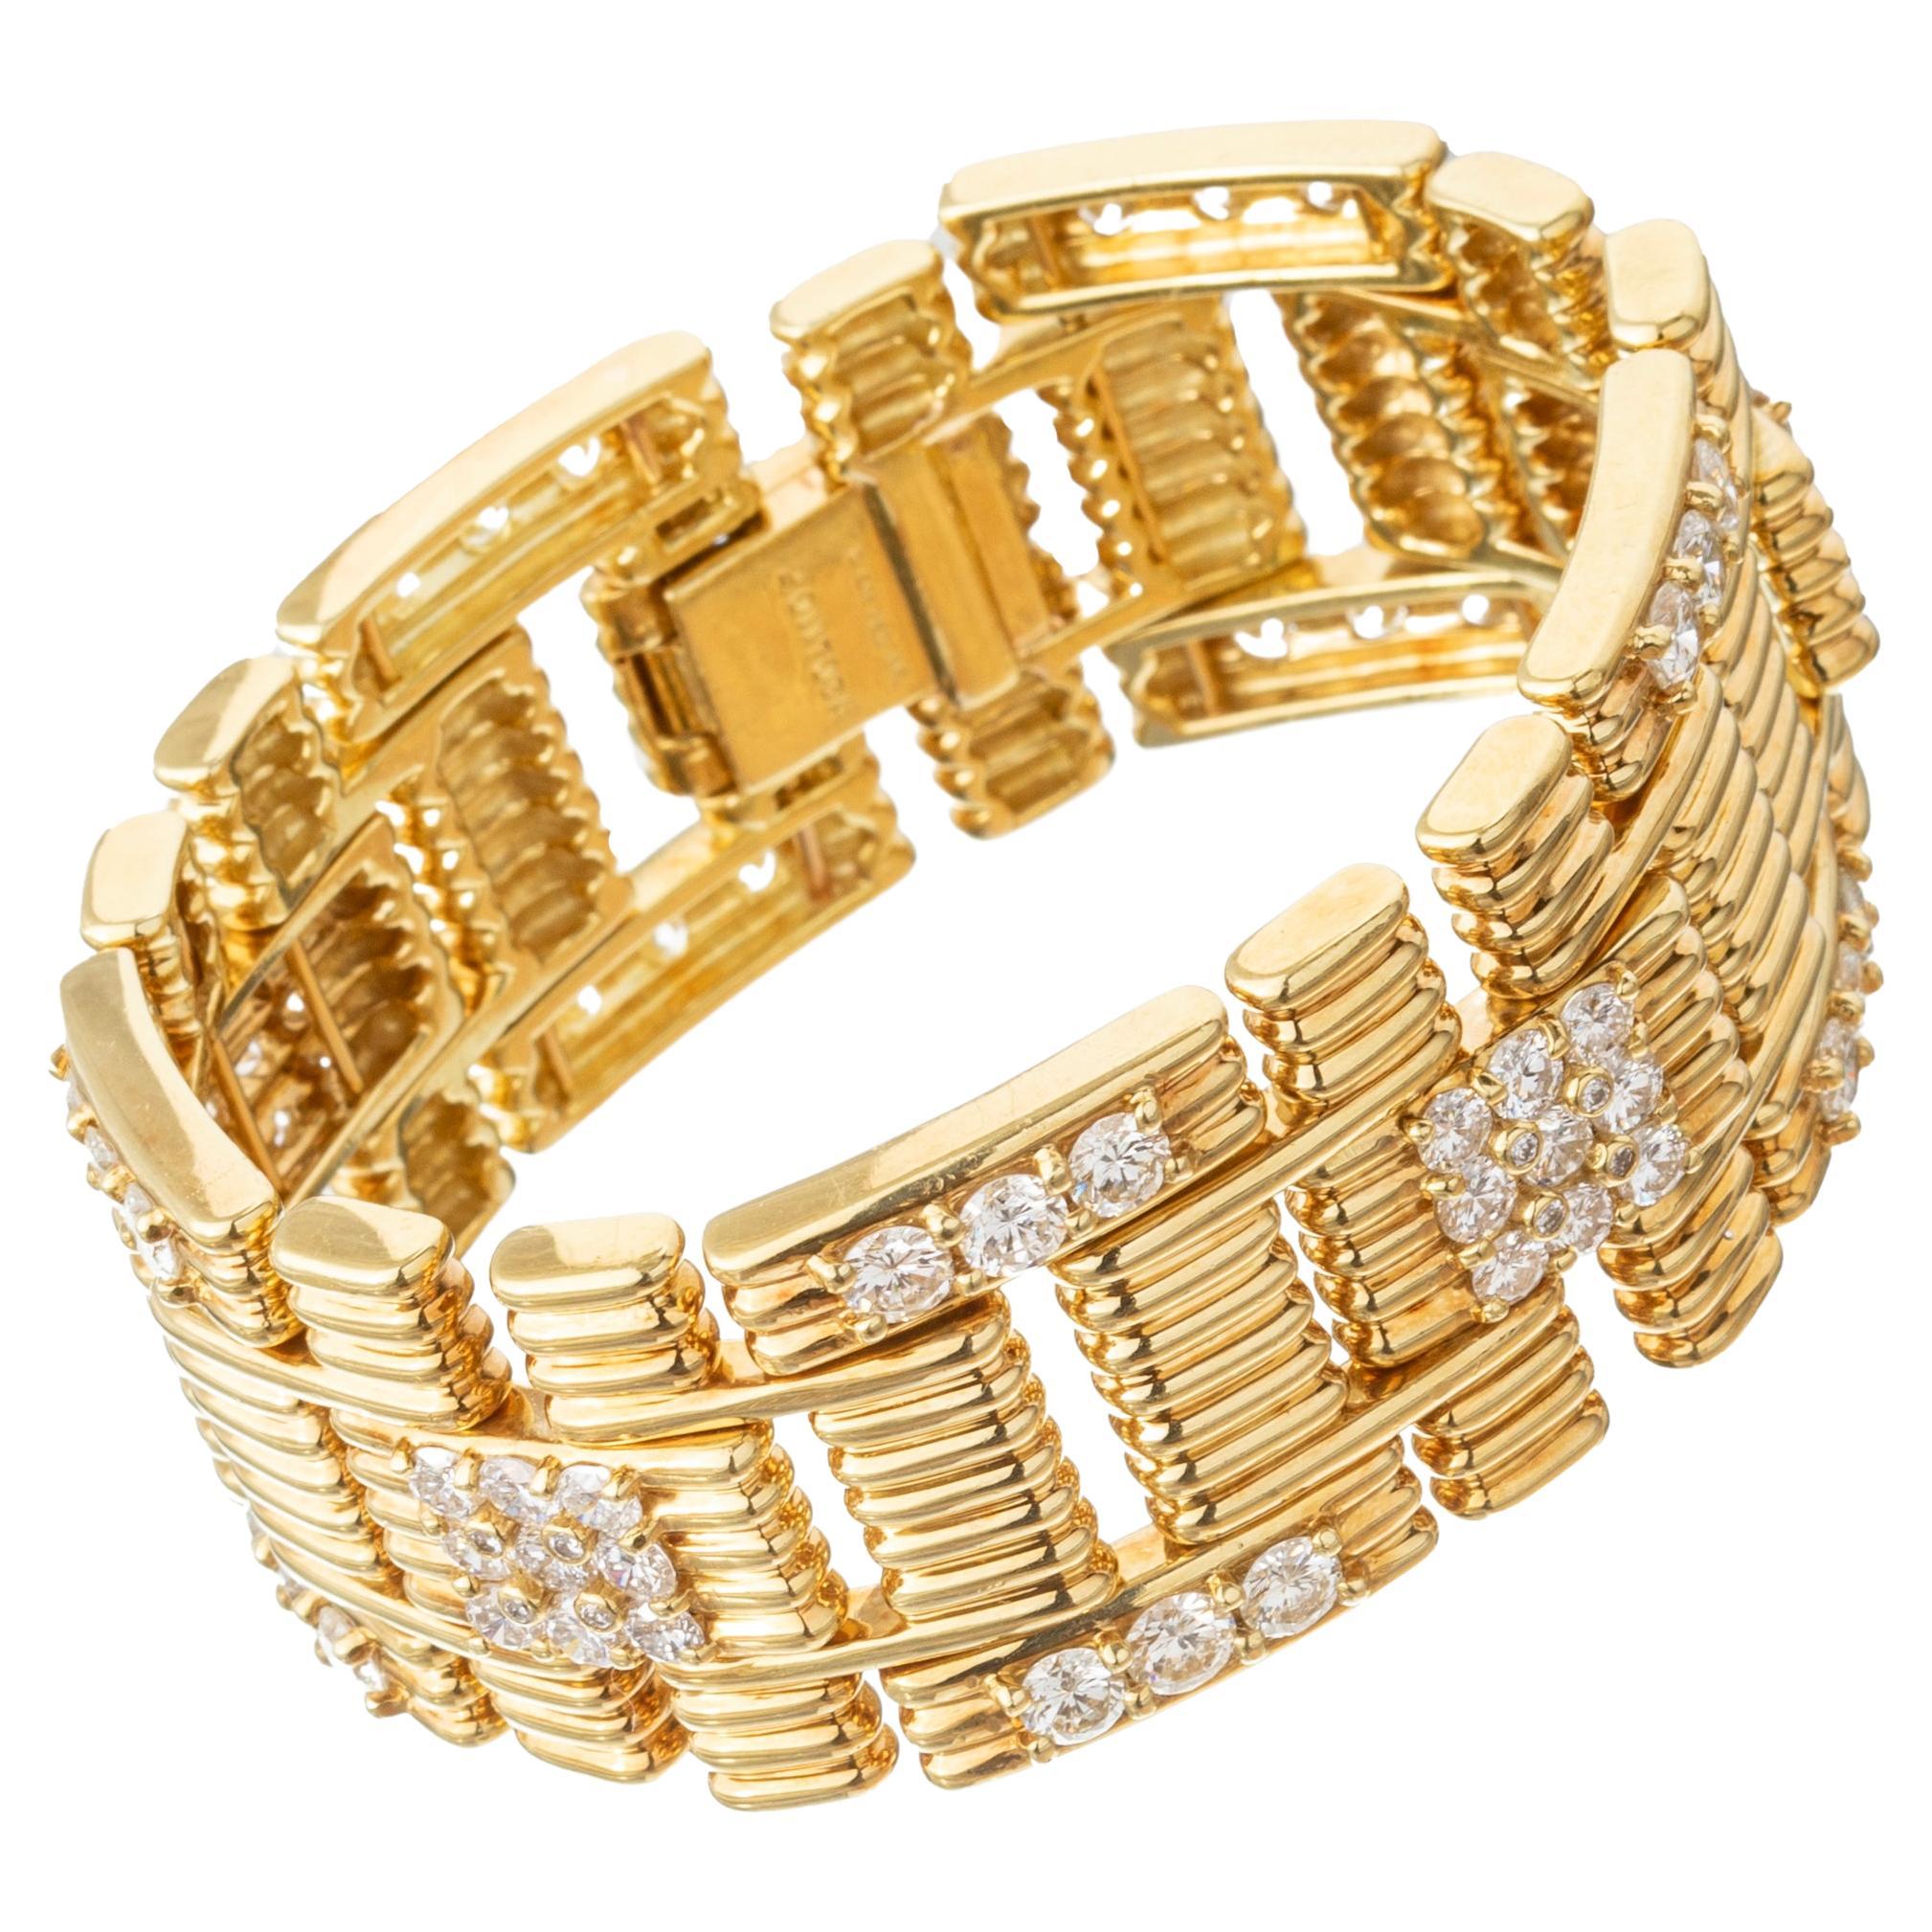 Jose Hess 18k Yellow Gold Diamond Link Bracelet